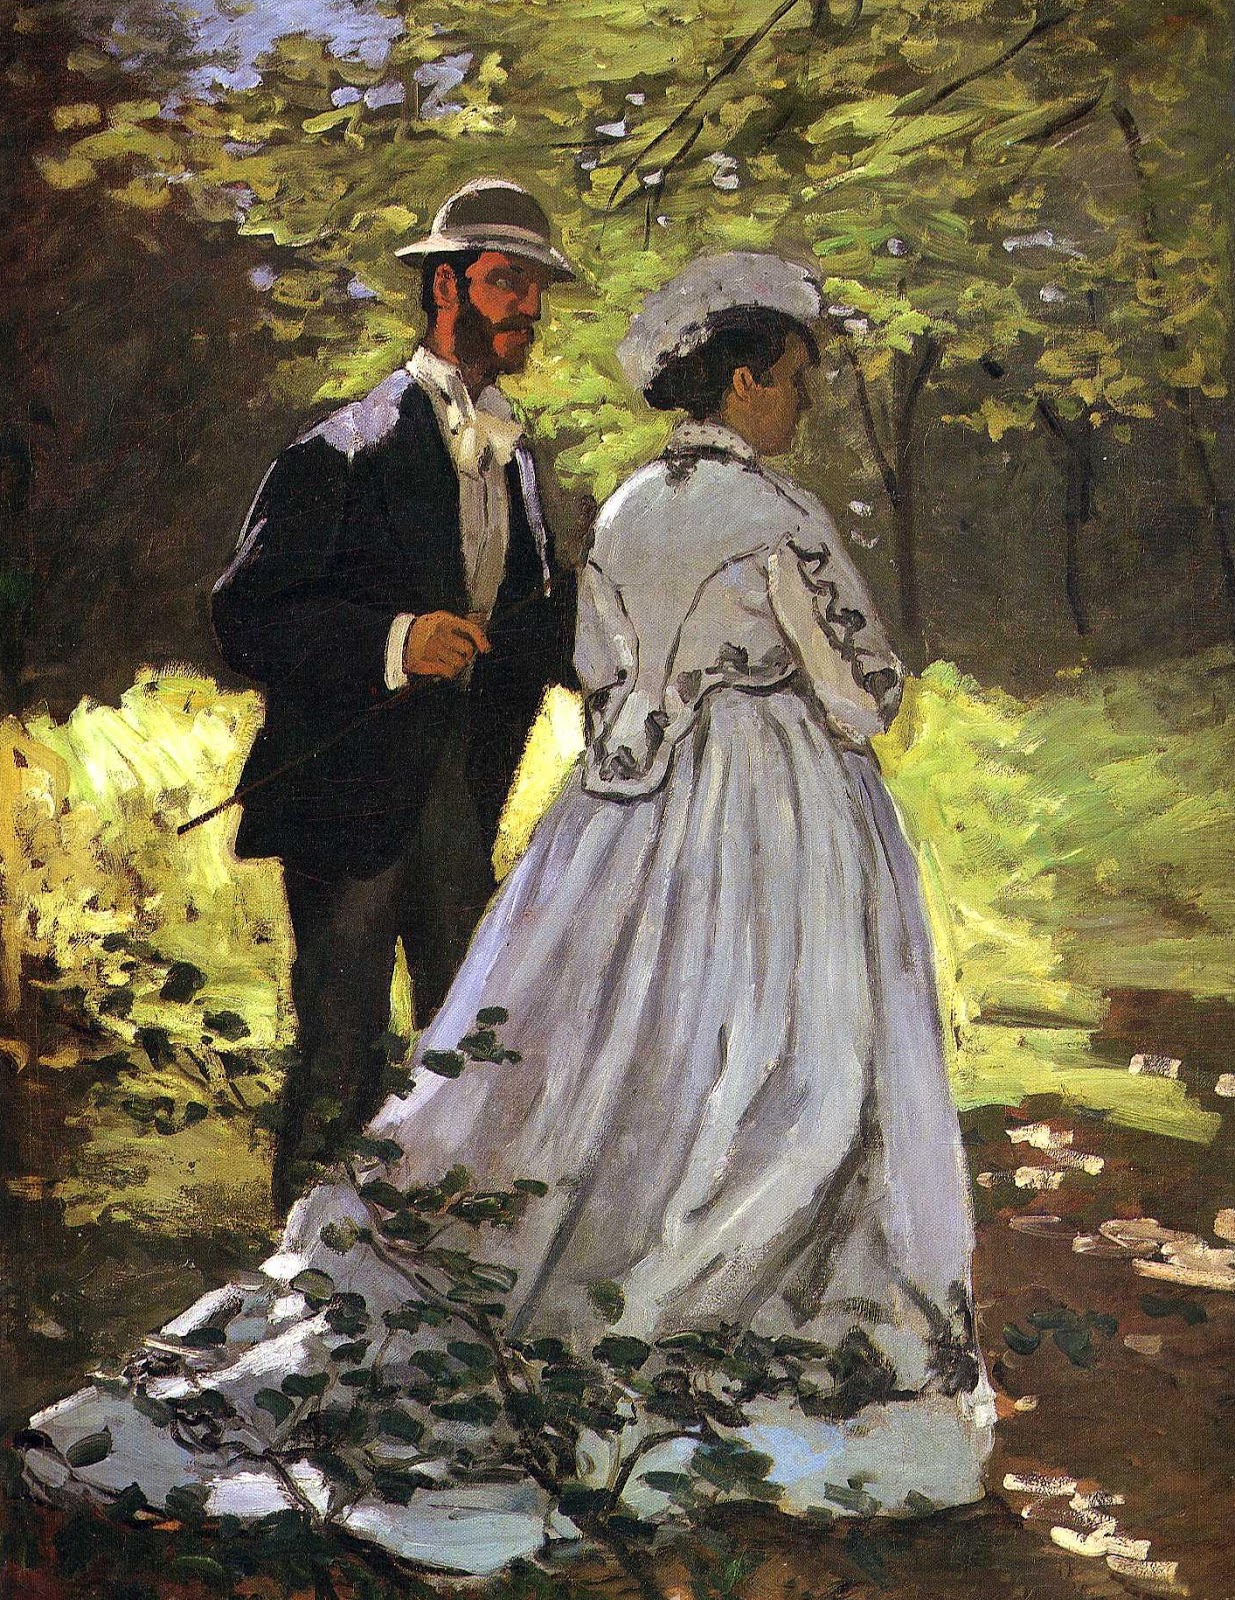 Claude+Monet-1840-1926 (136).jpg